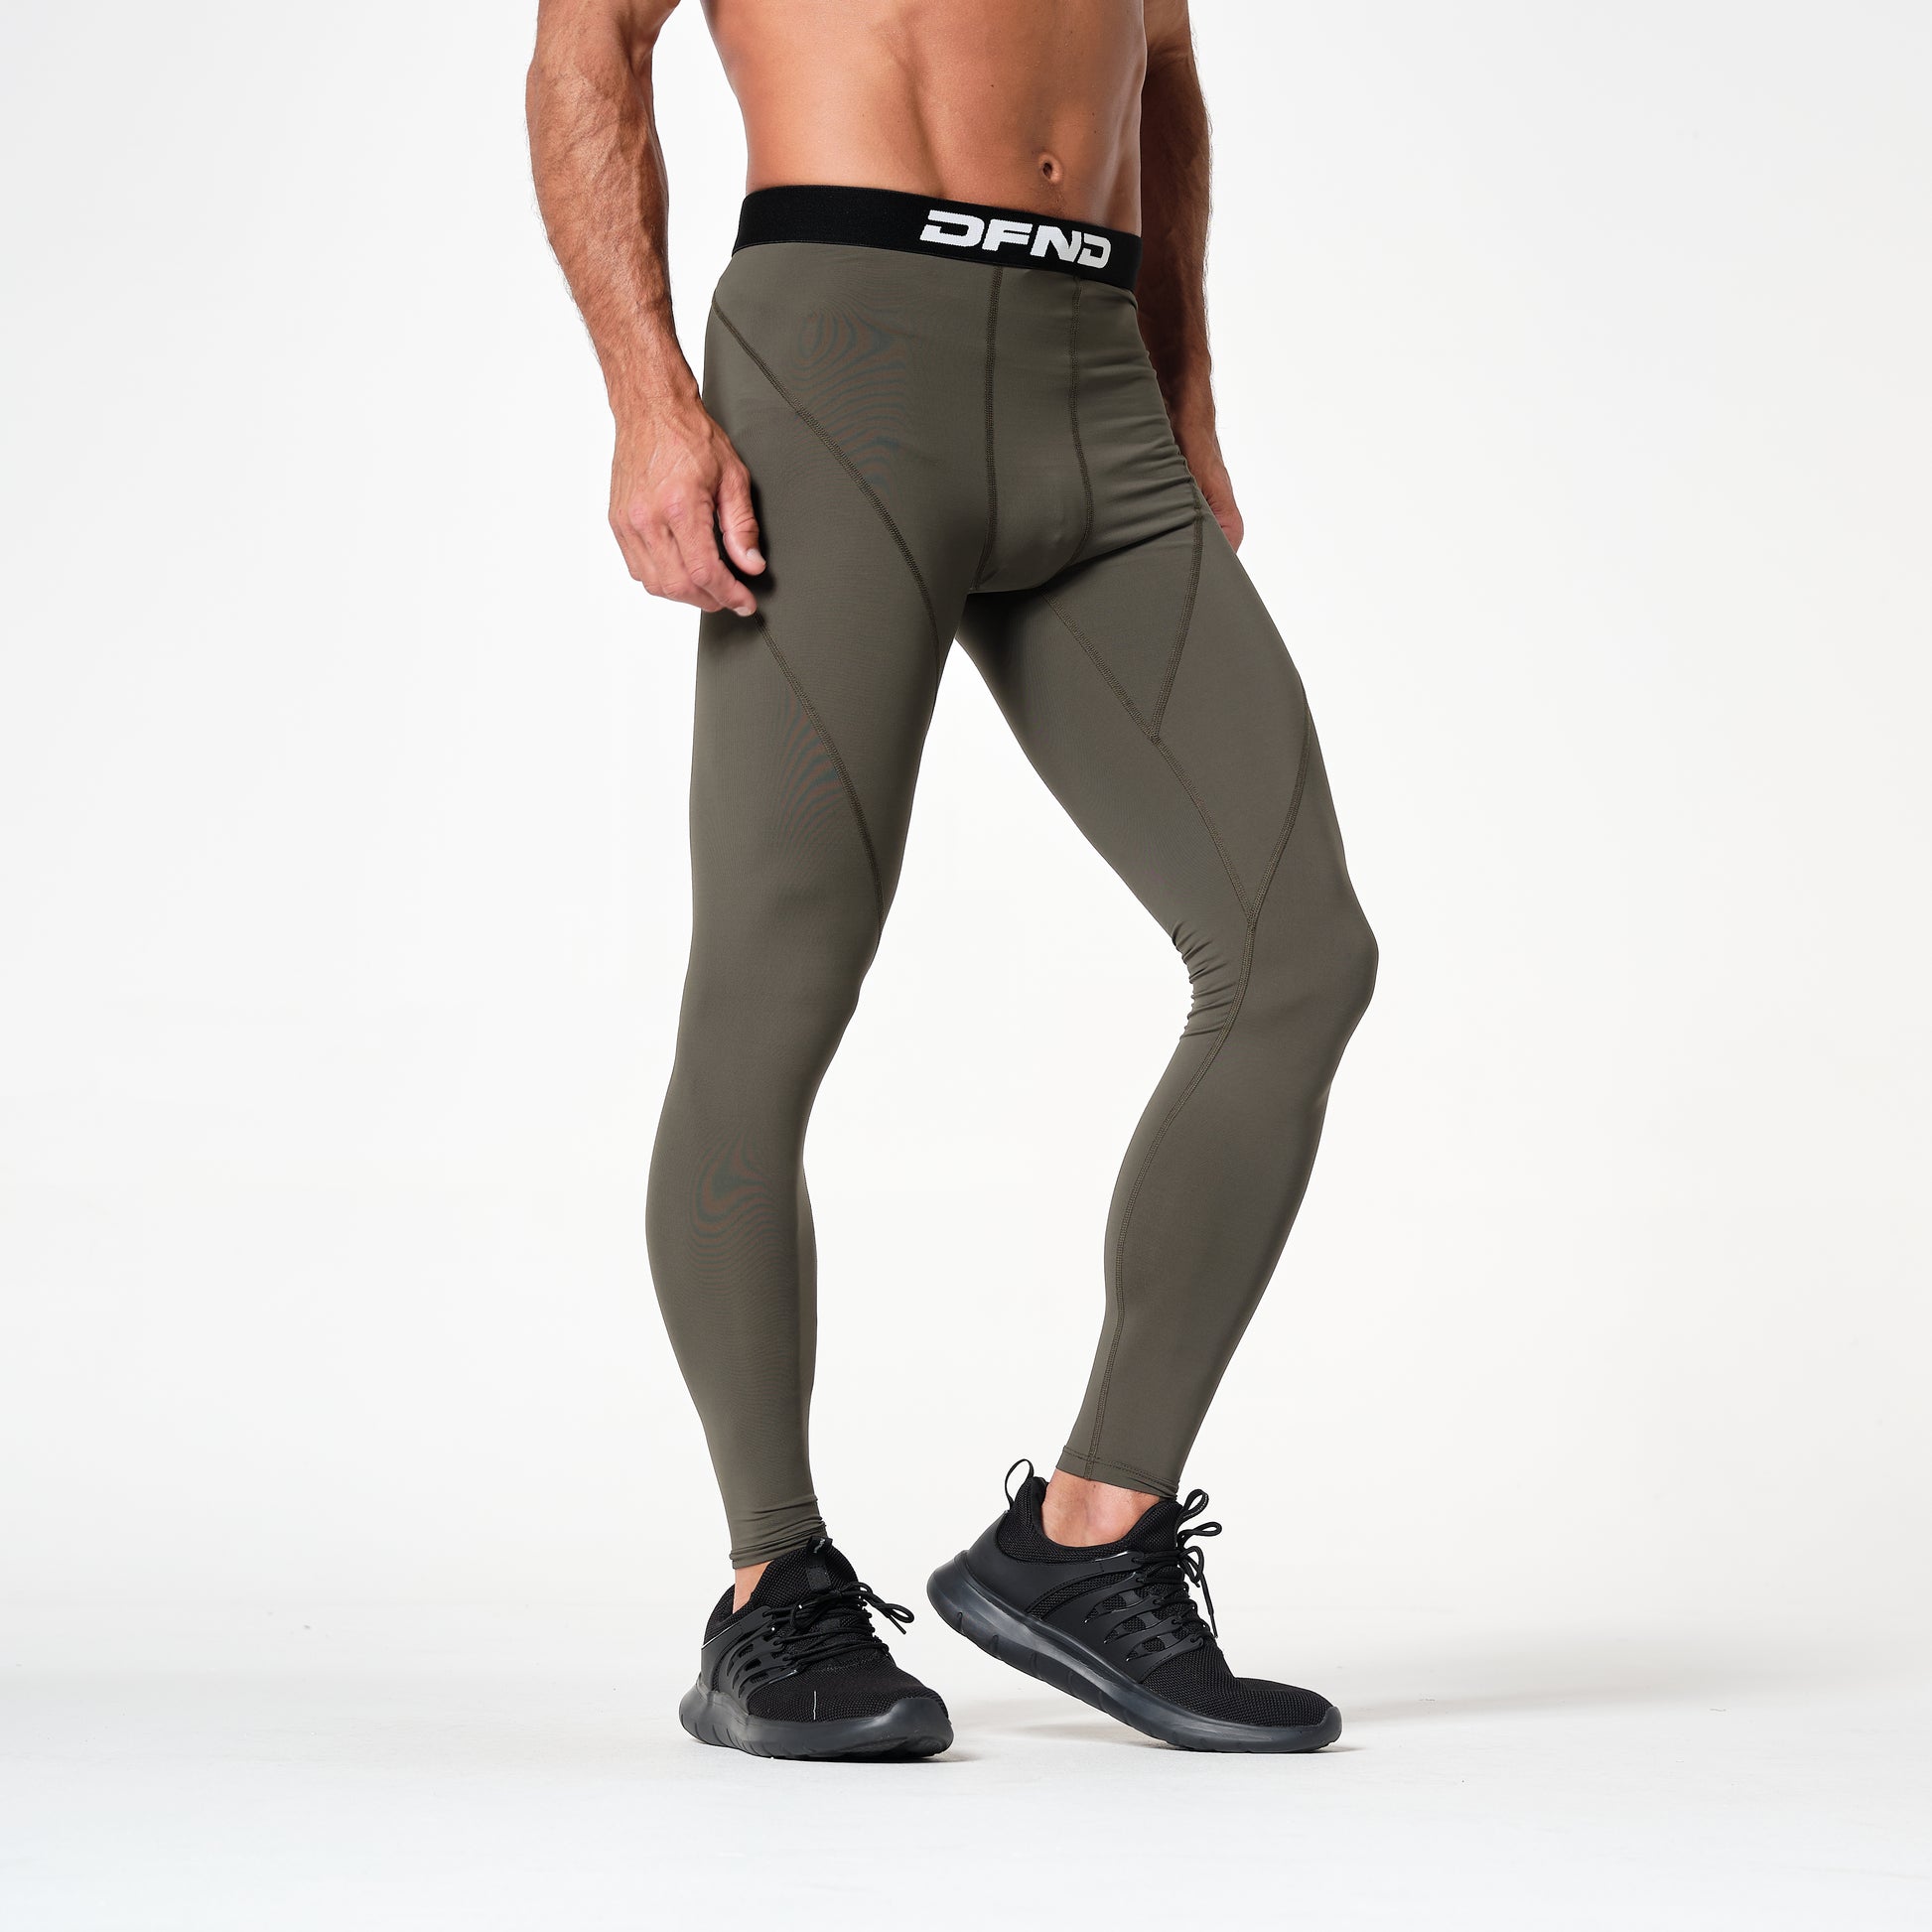 Men's Performance Pants, Recovery Pants